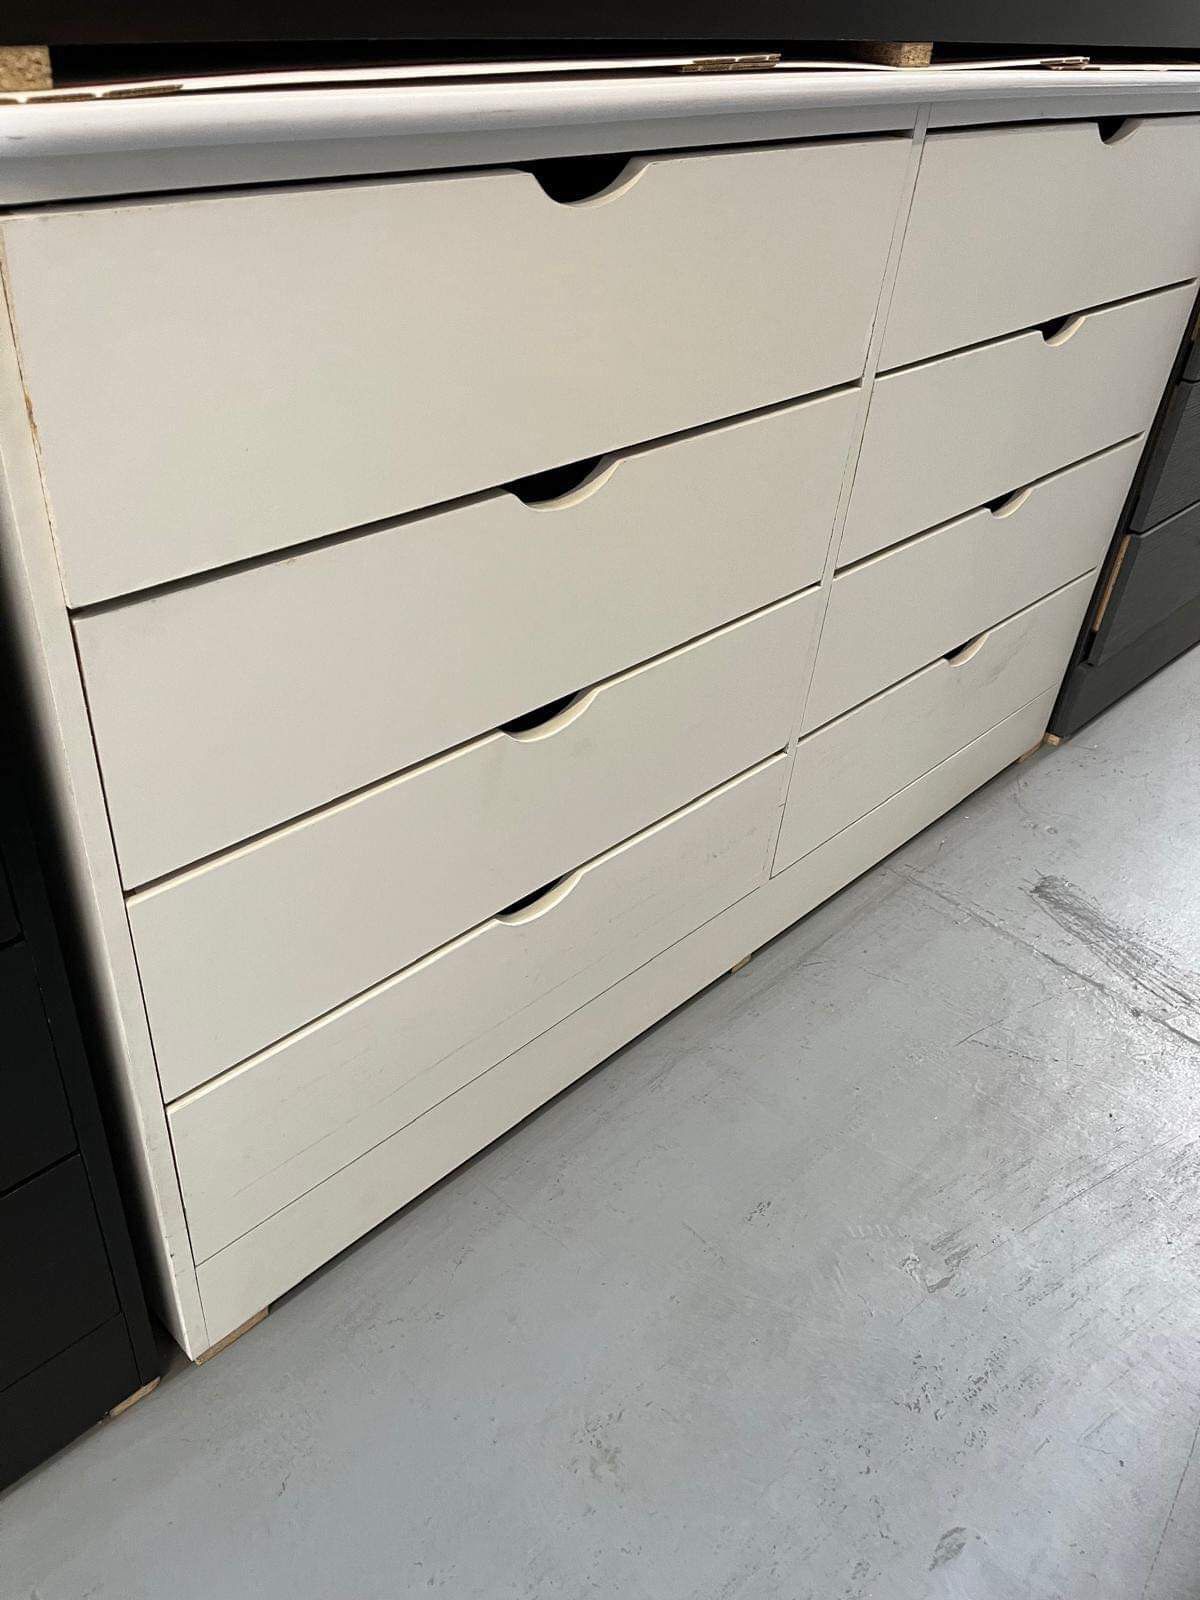 New White Dresser 